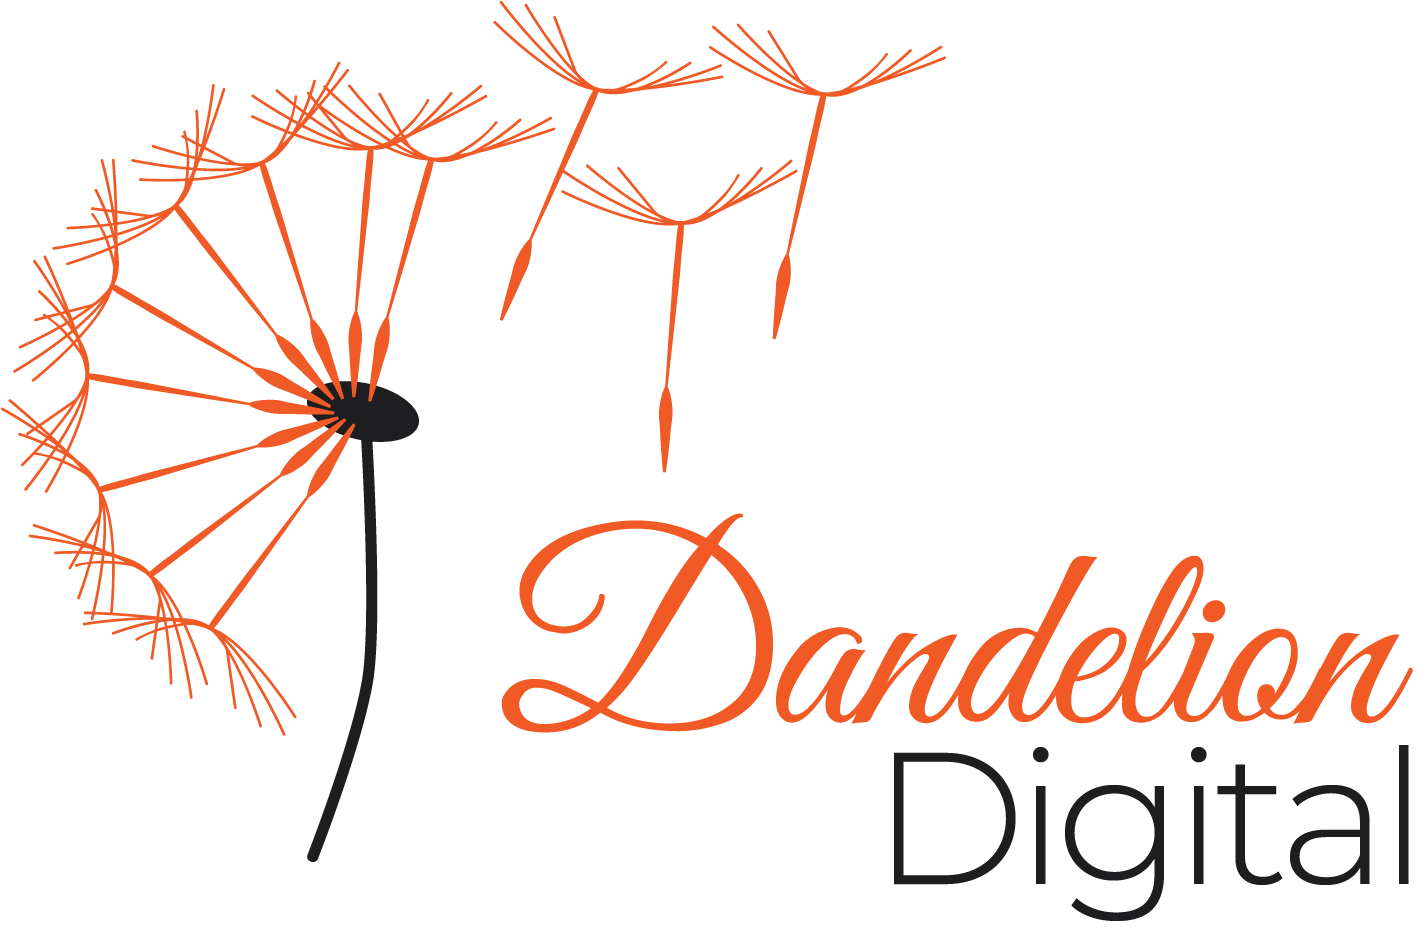 Dandelion Digital Nova Scotia